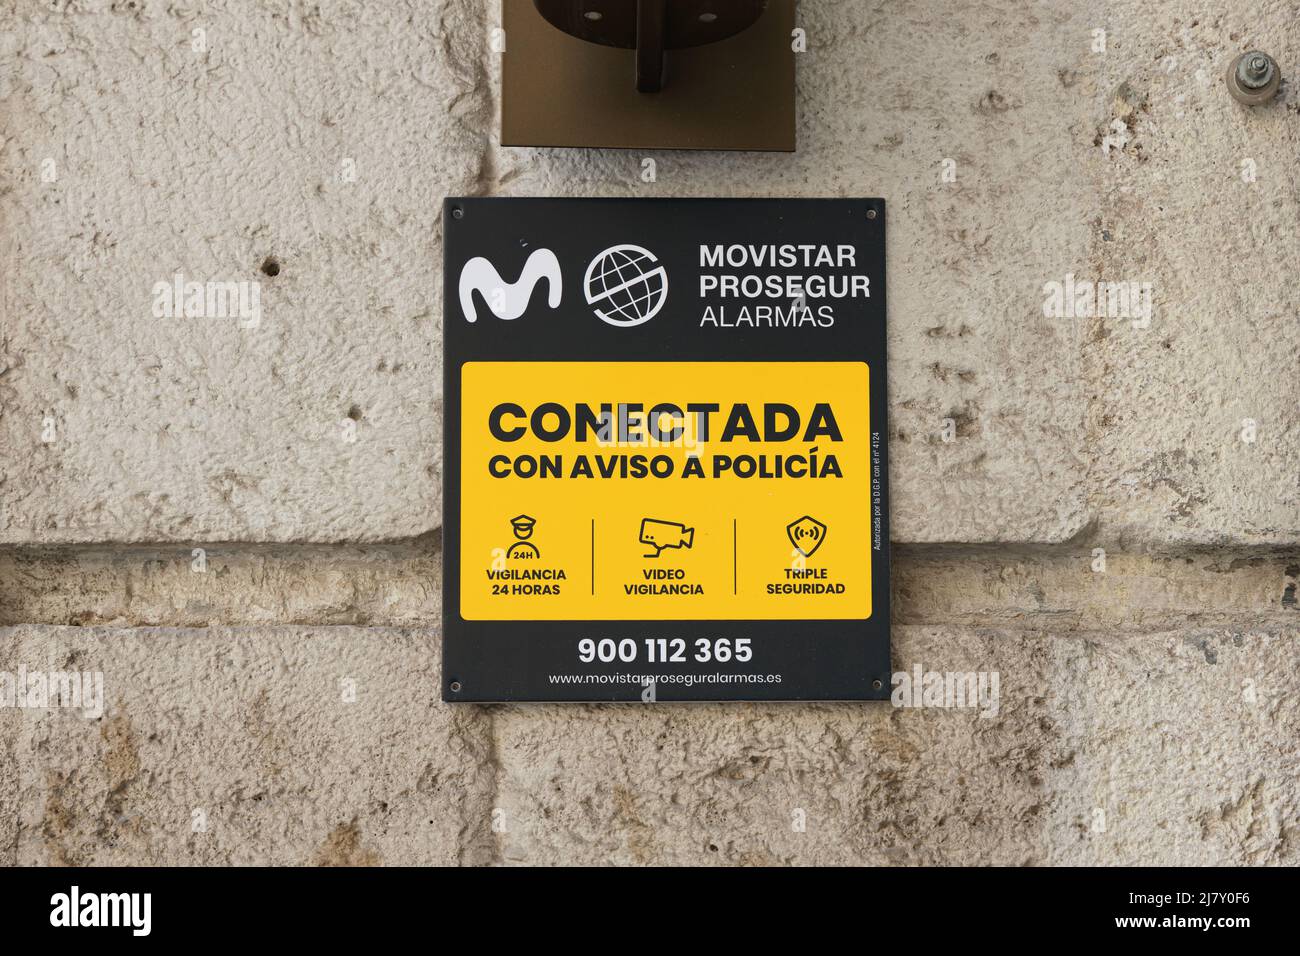 VALENCIA, SPAIN - MAY 05, 2022: Movistar Prosegur Alarmas plate on building facade Stock Photo